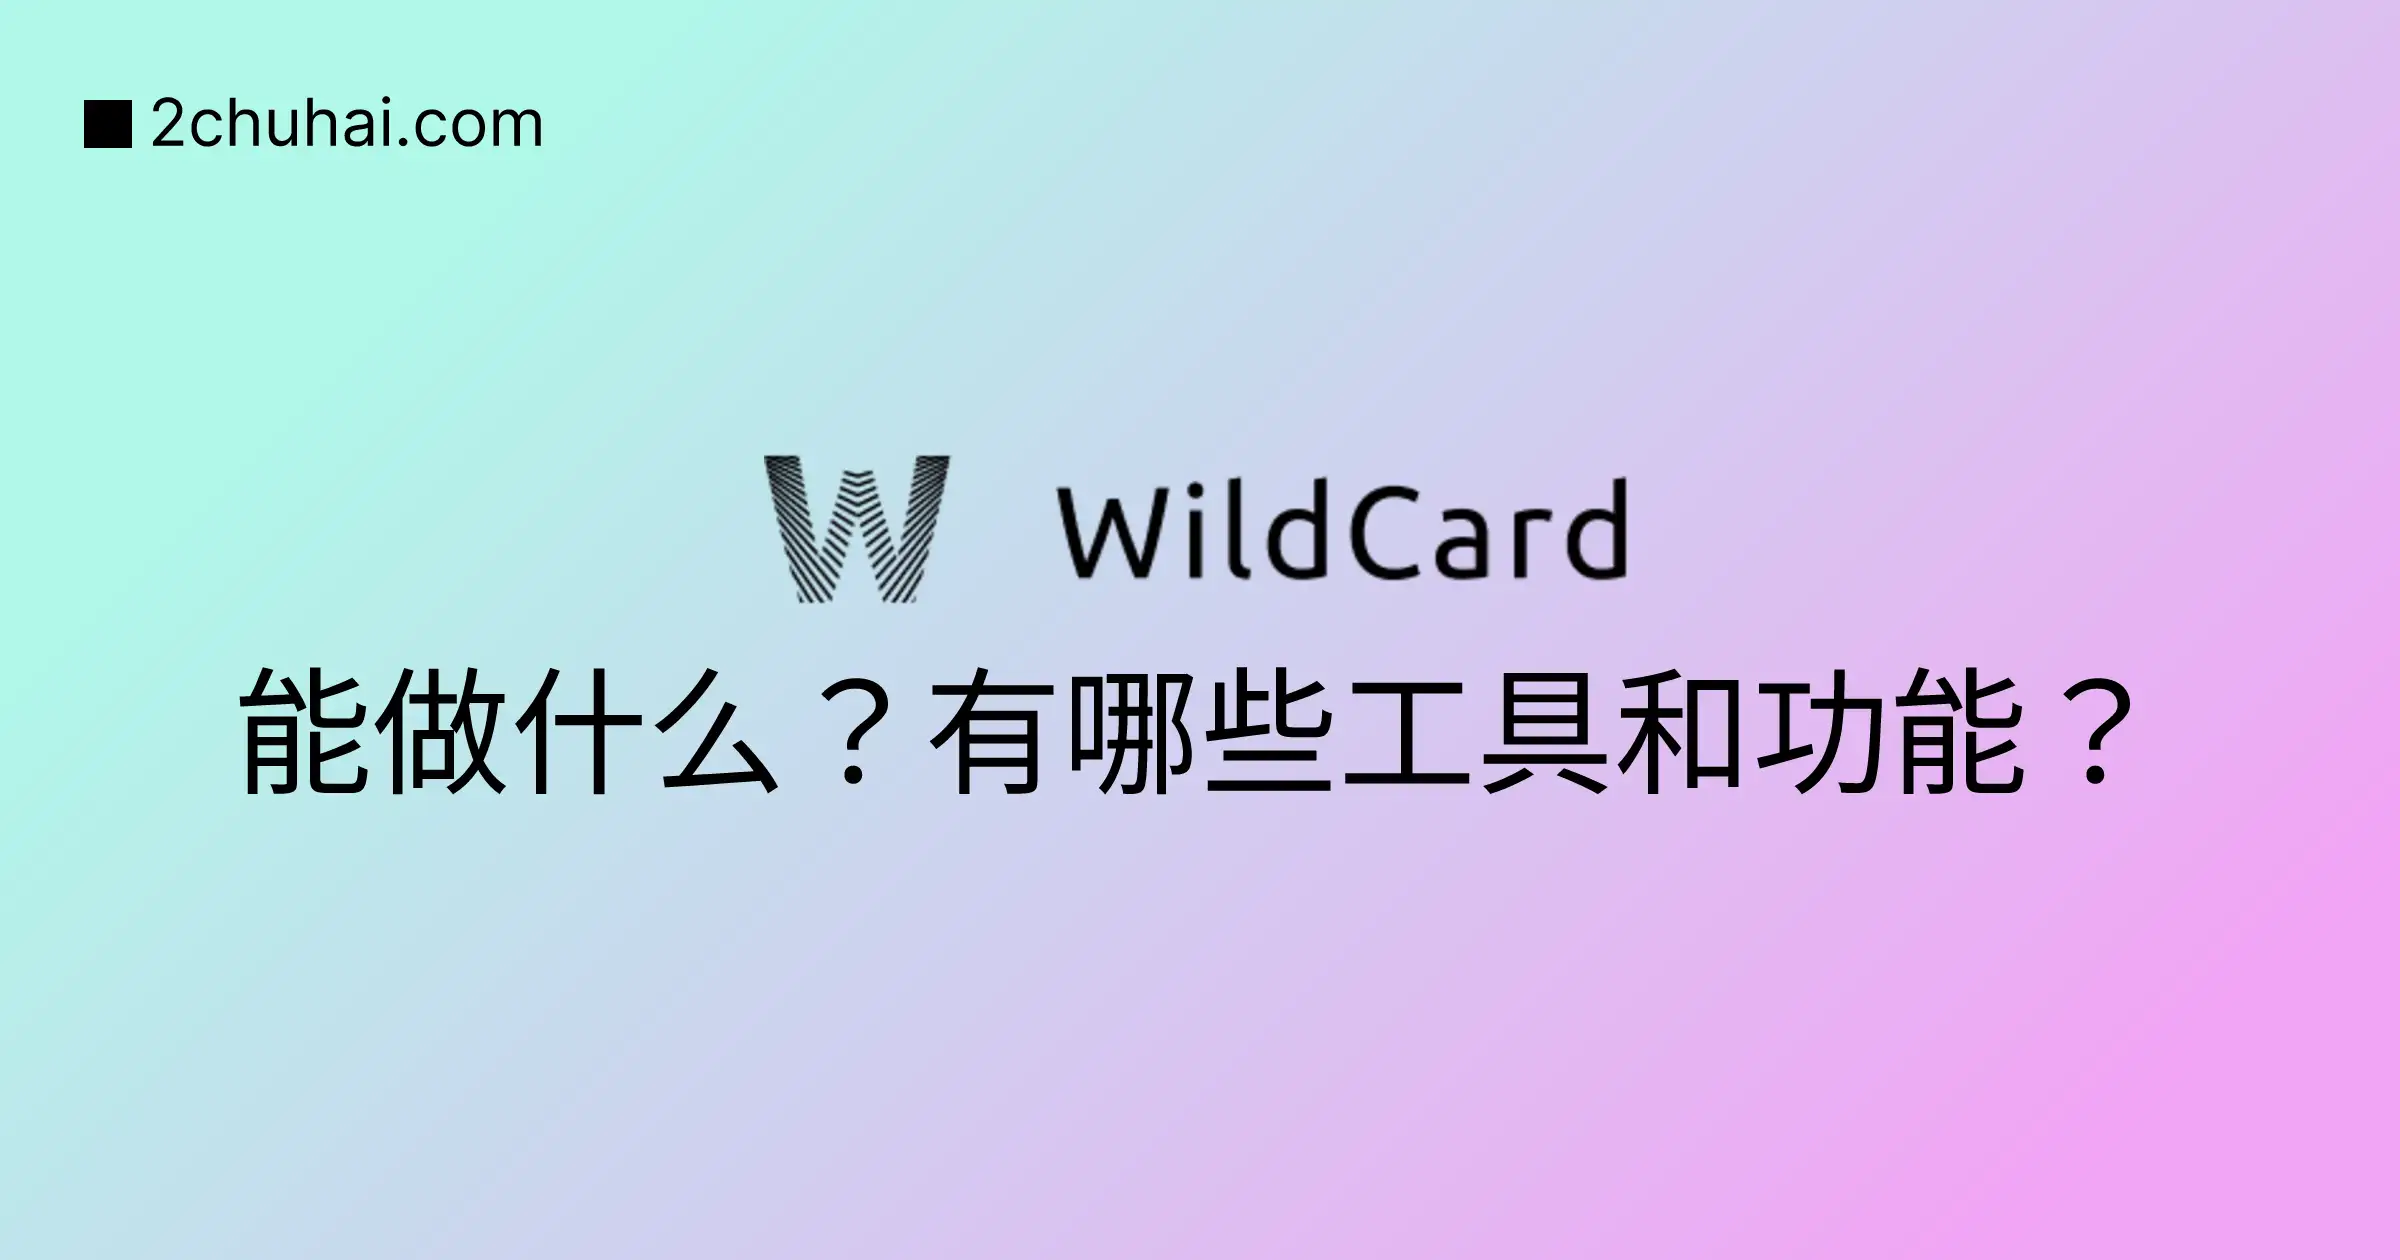 WildCard靠谱吗？能做什么？有哪些工具和功能？